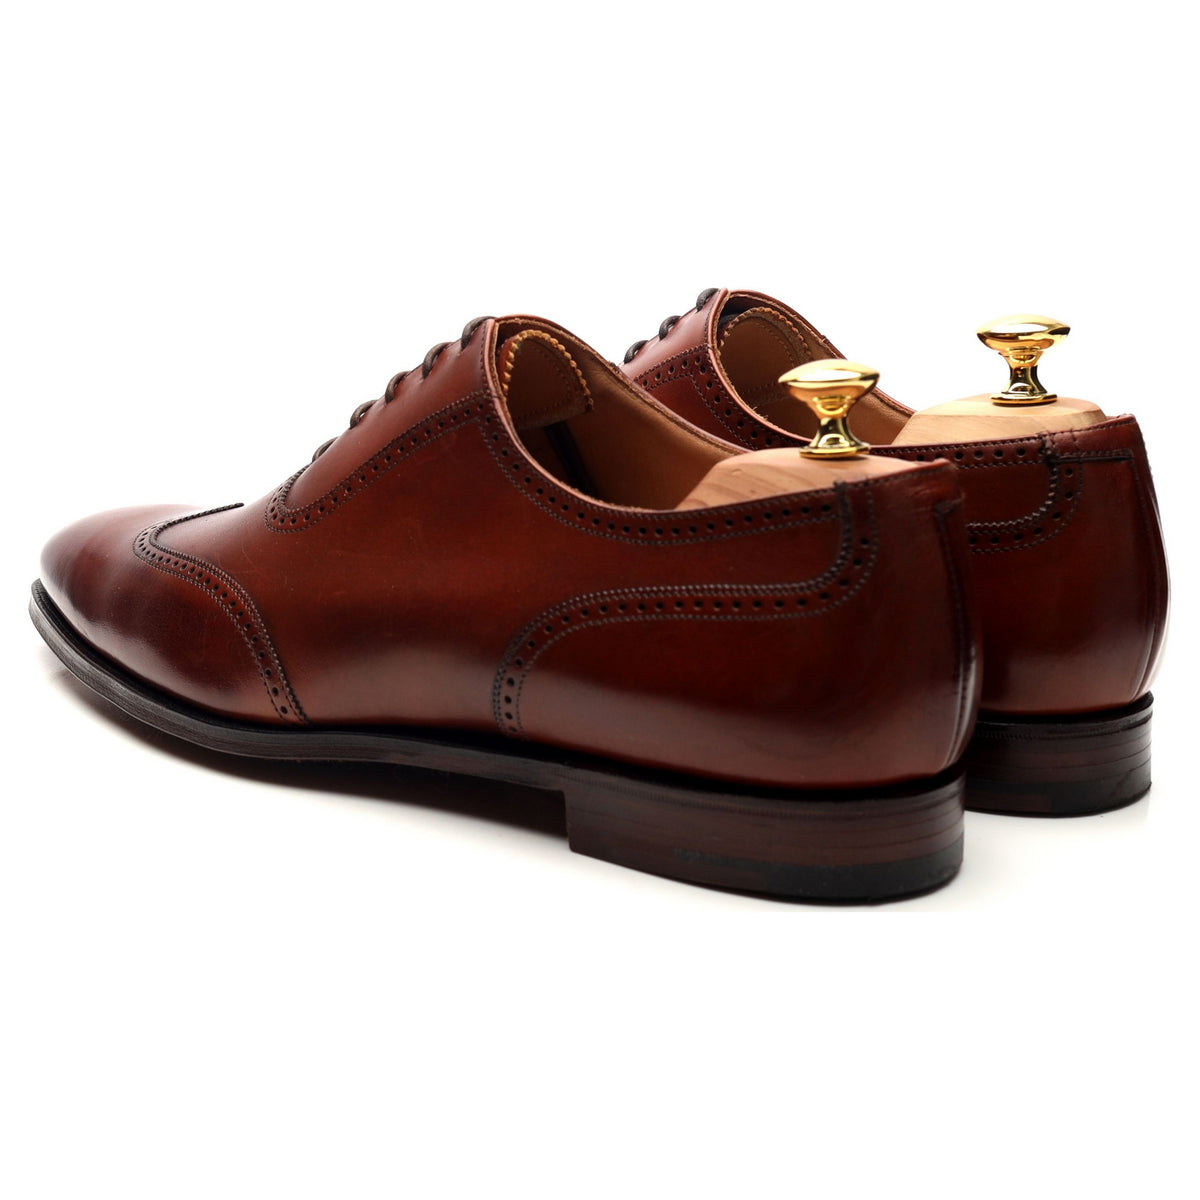 Tan Brown Leather Oxford Brogues UK 10 US 11